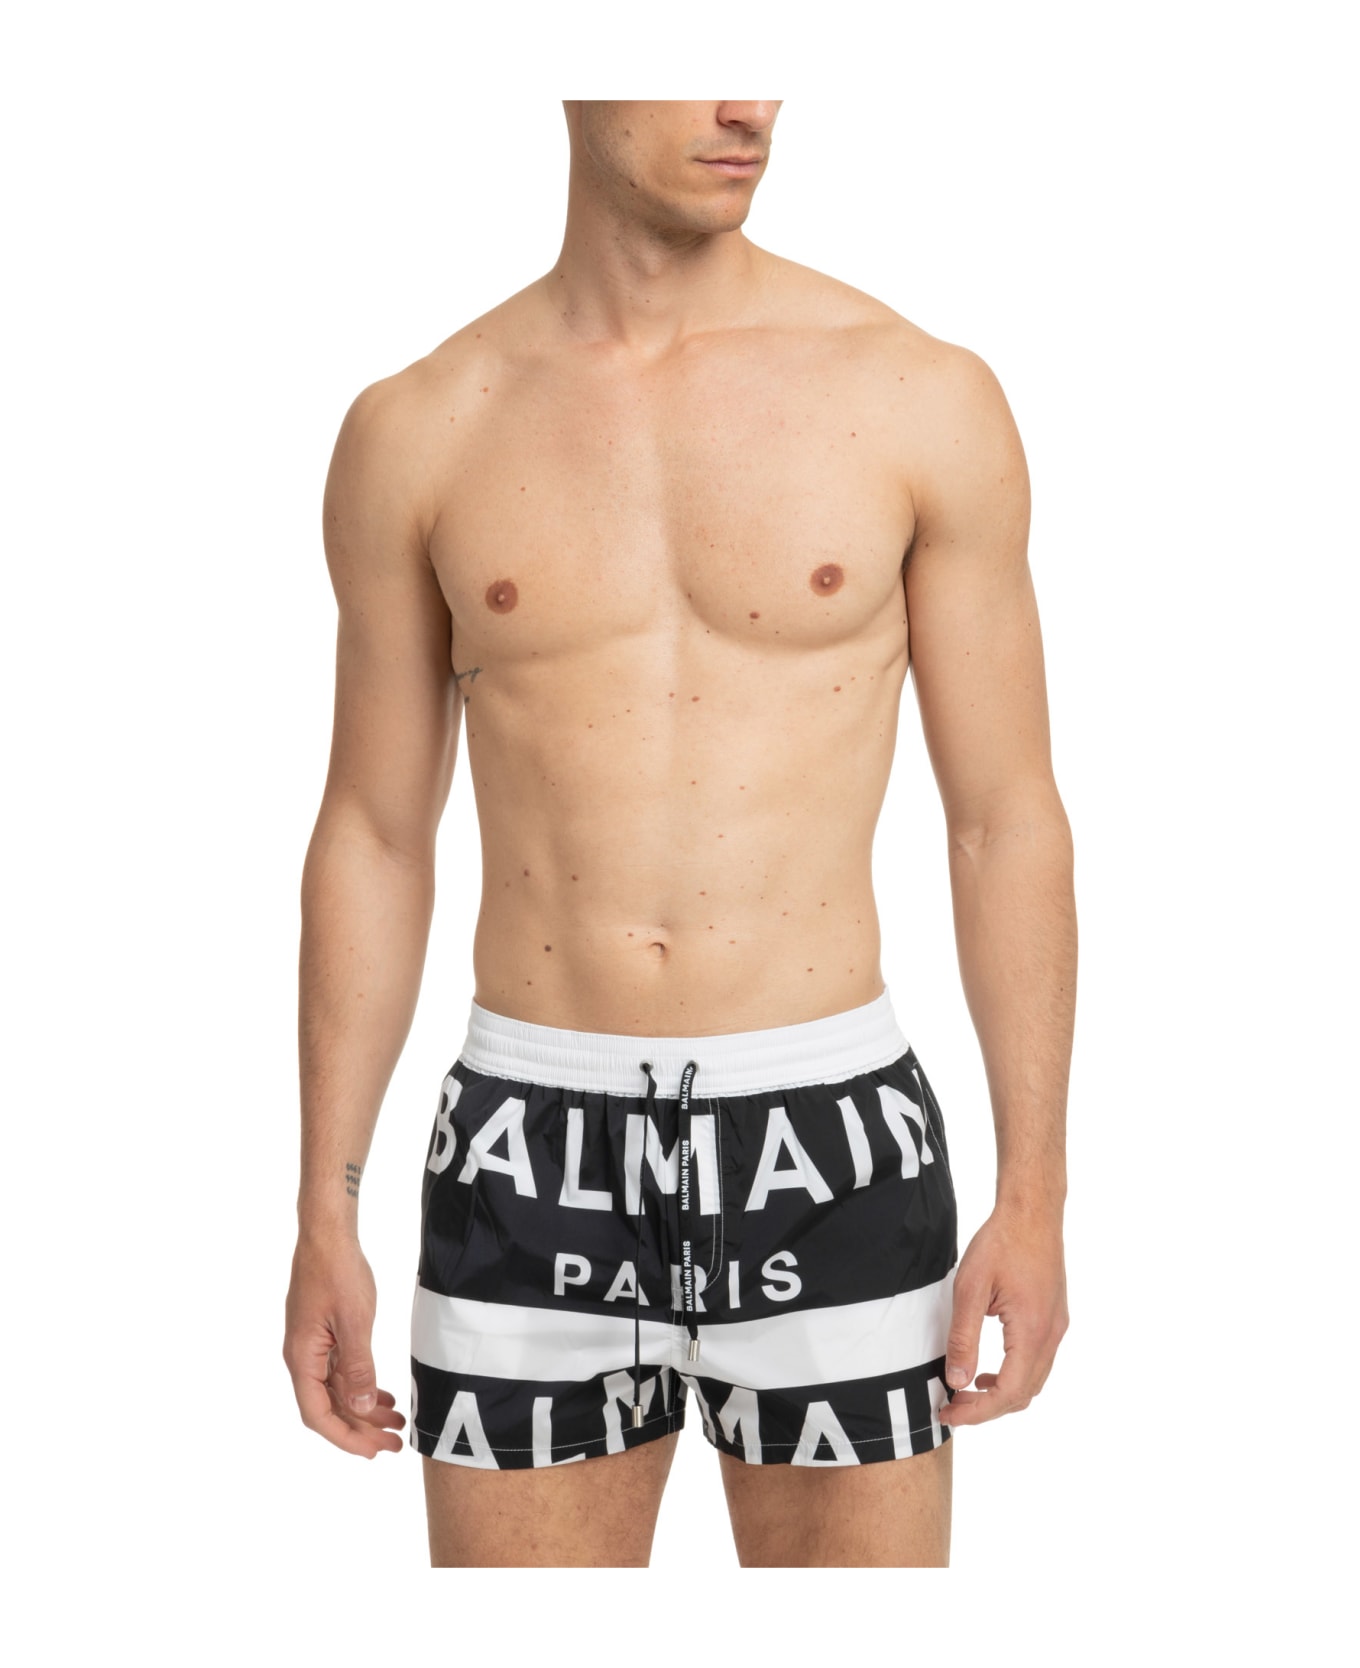 Balmain Swim Shorts - Black スイムトランクス